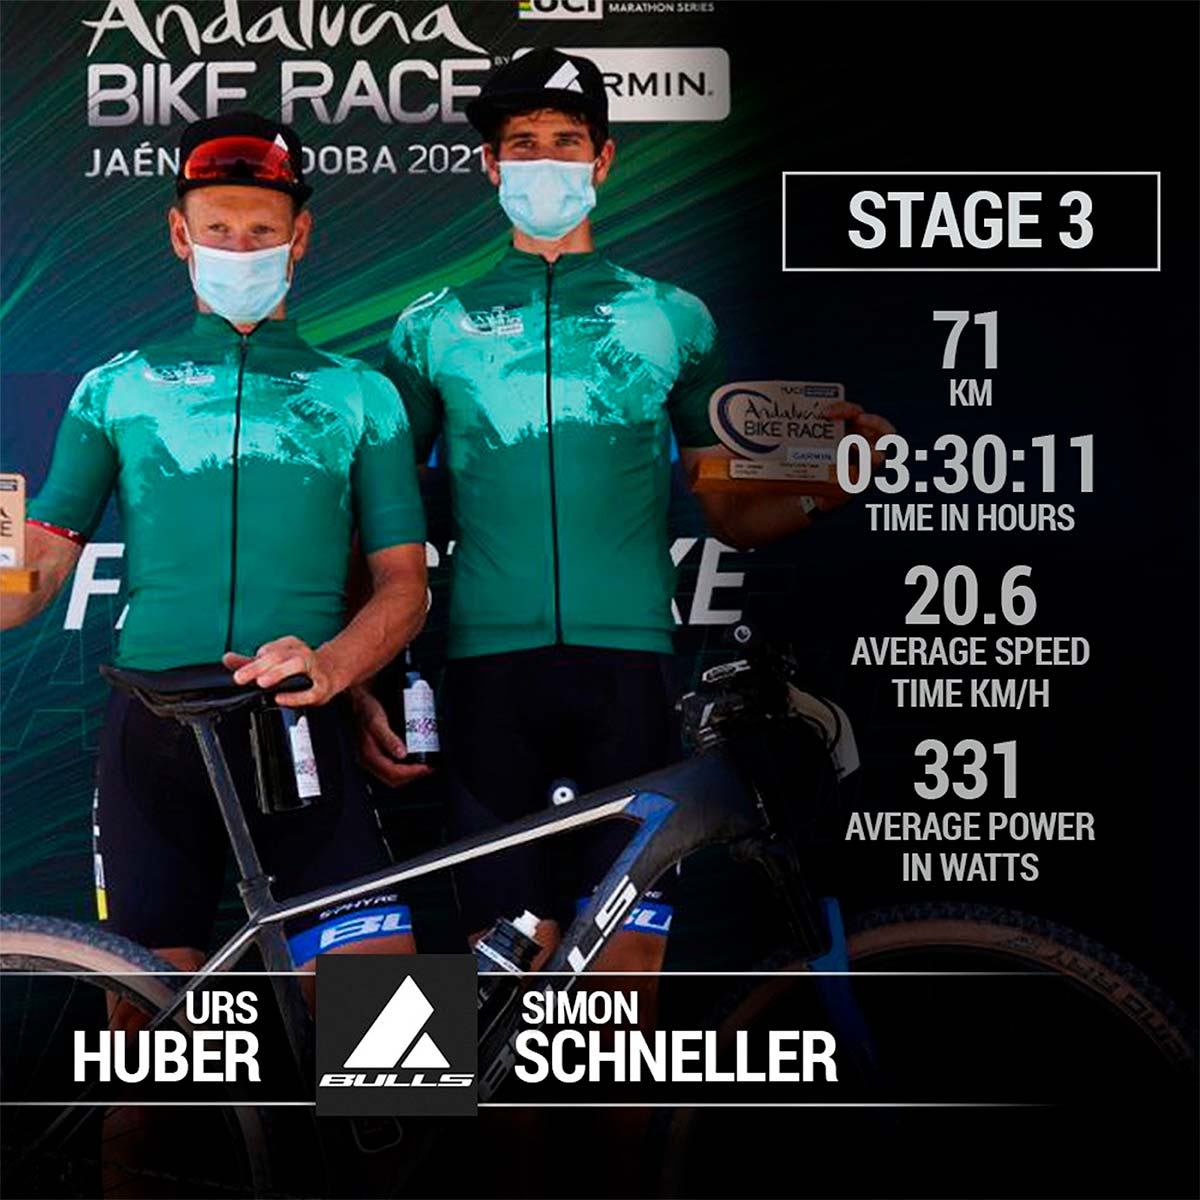 En TodoMountainBike: Andalucía Bike Race 2021: Urs Huber-Simon Schneller y Katazina Sosna-Stefanie Dohrn ganan la tercera etapa